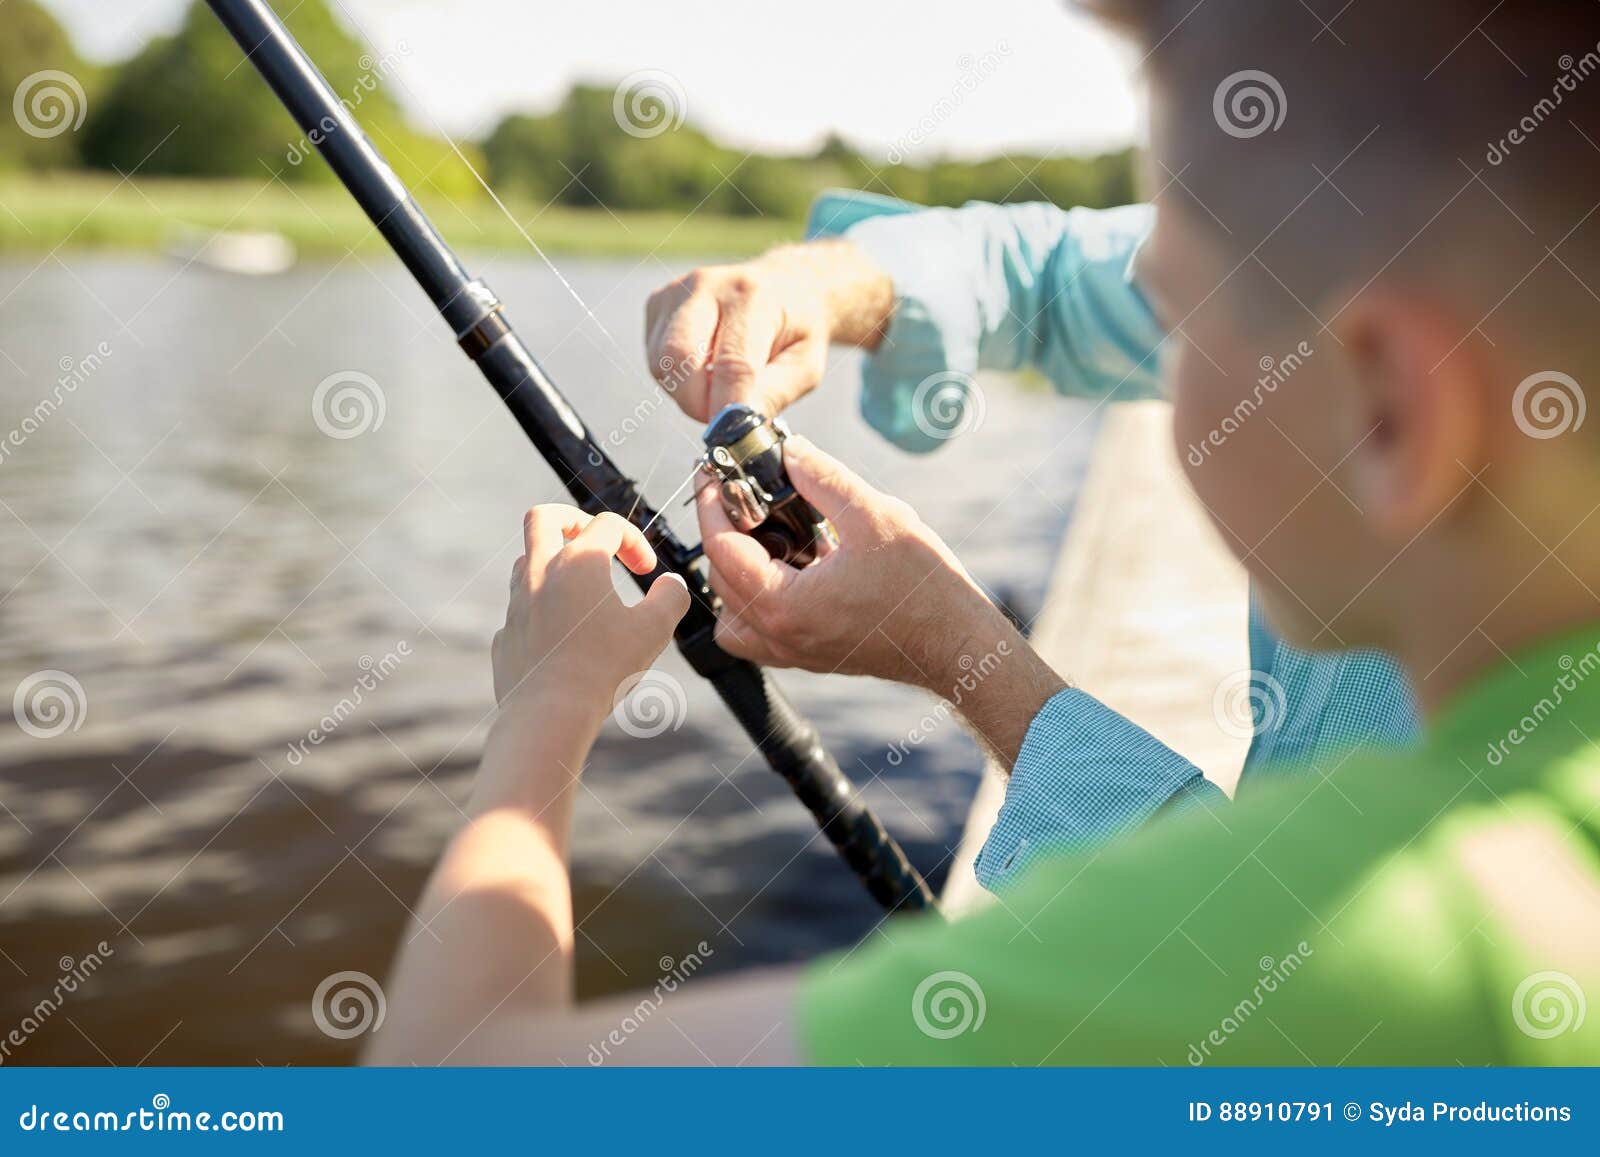 252 Bobbin Fishing Water Stock Photos - Free & Royalty-Free Stock Photos  from Dreamstime